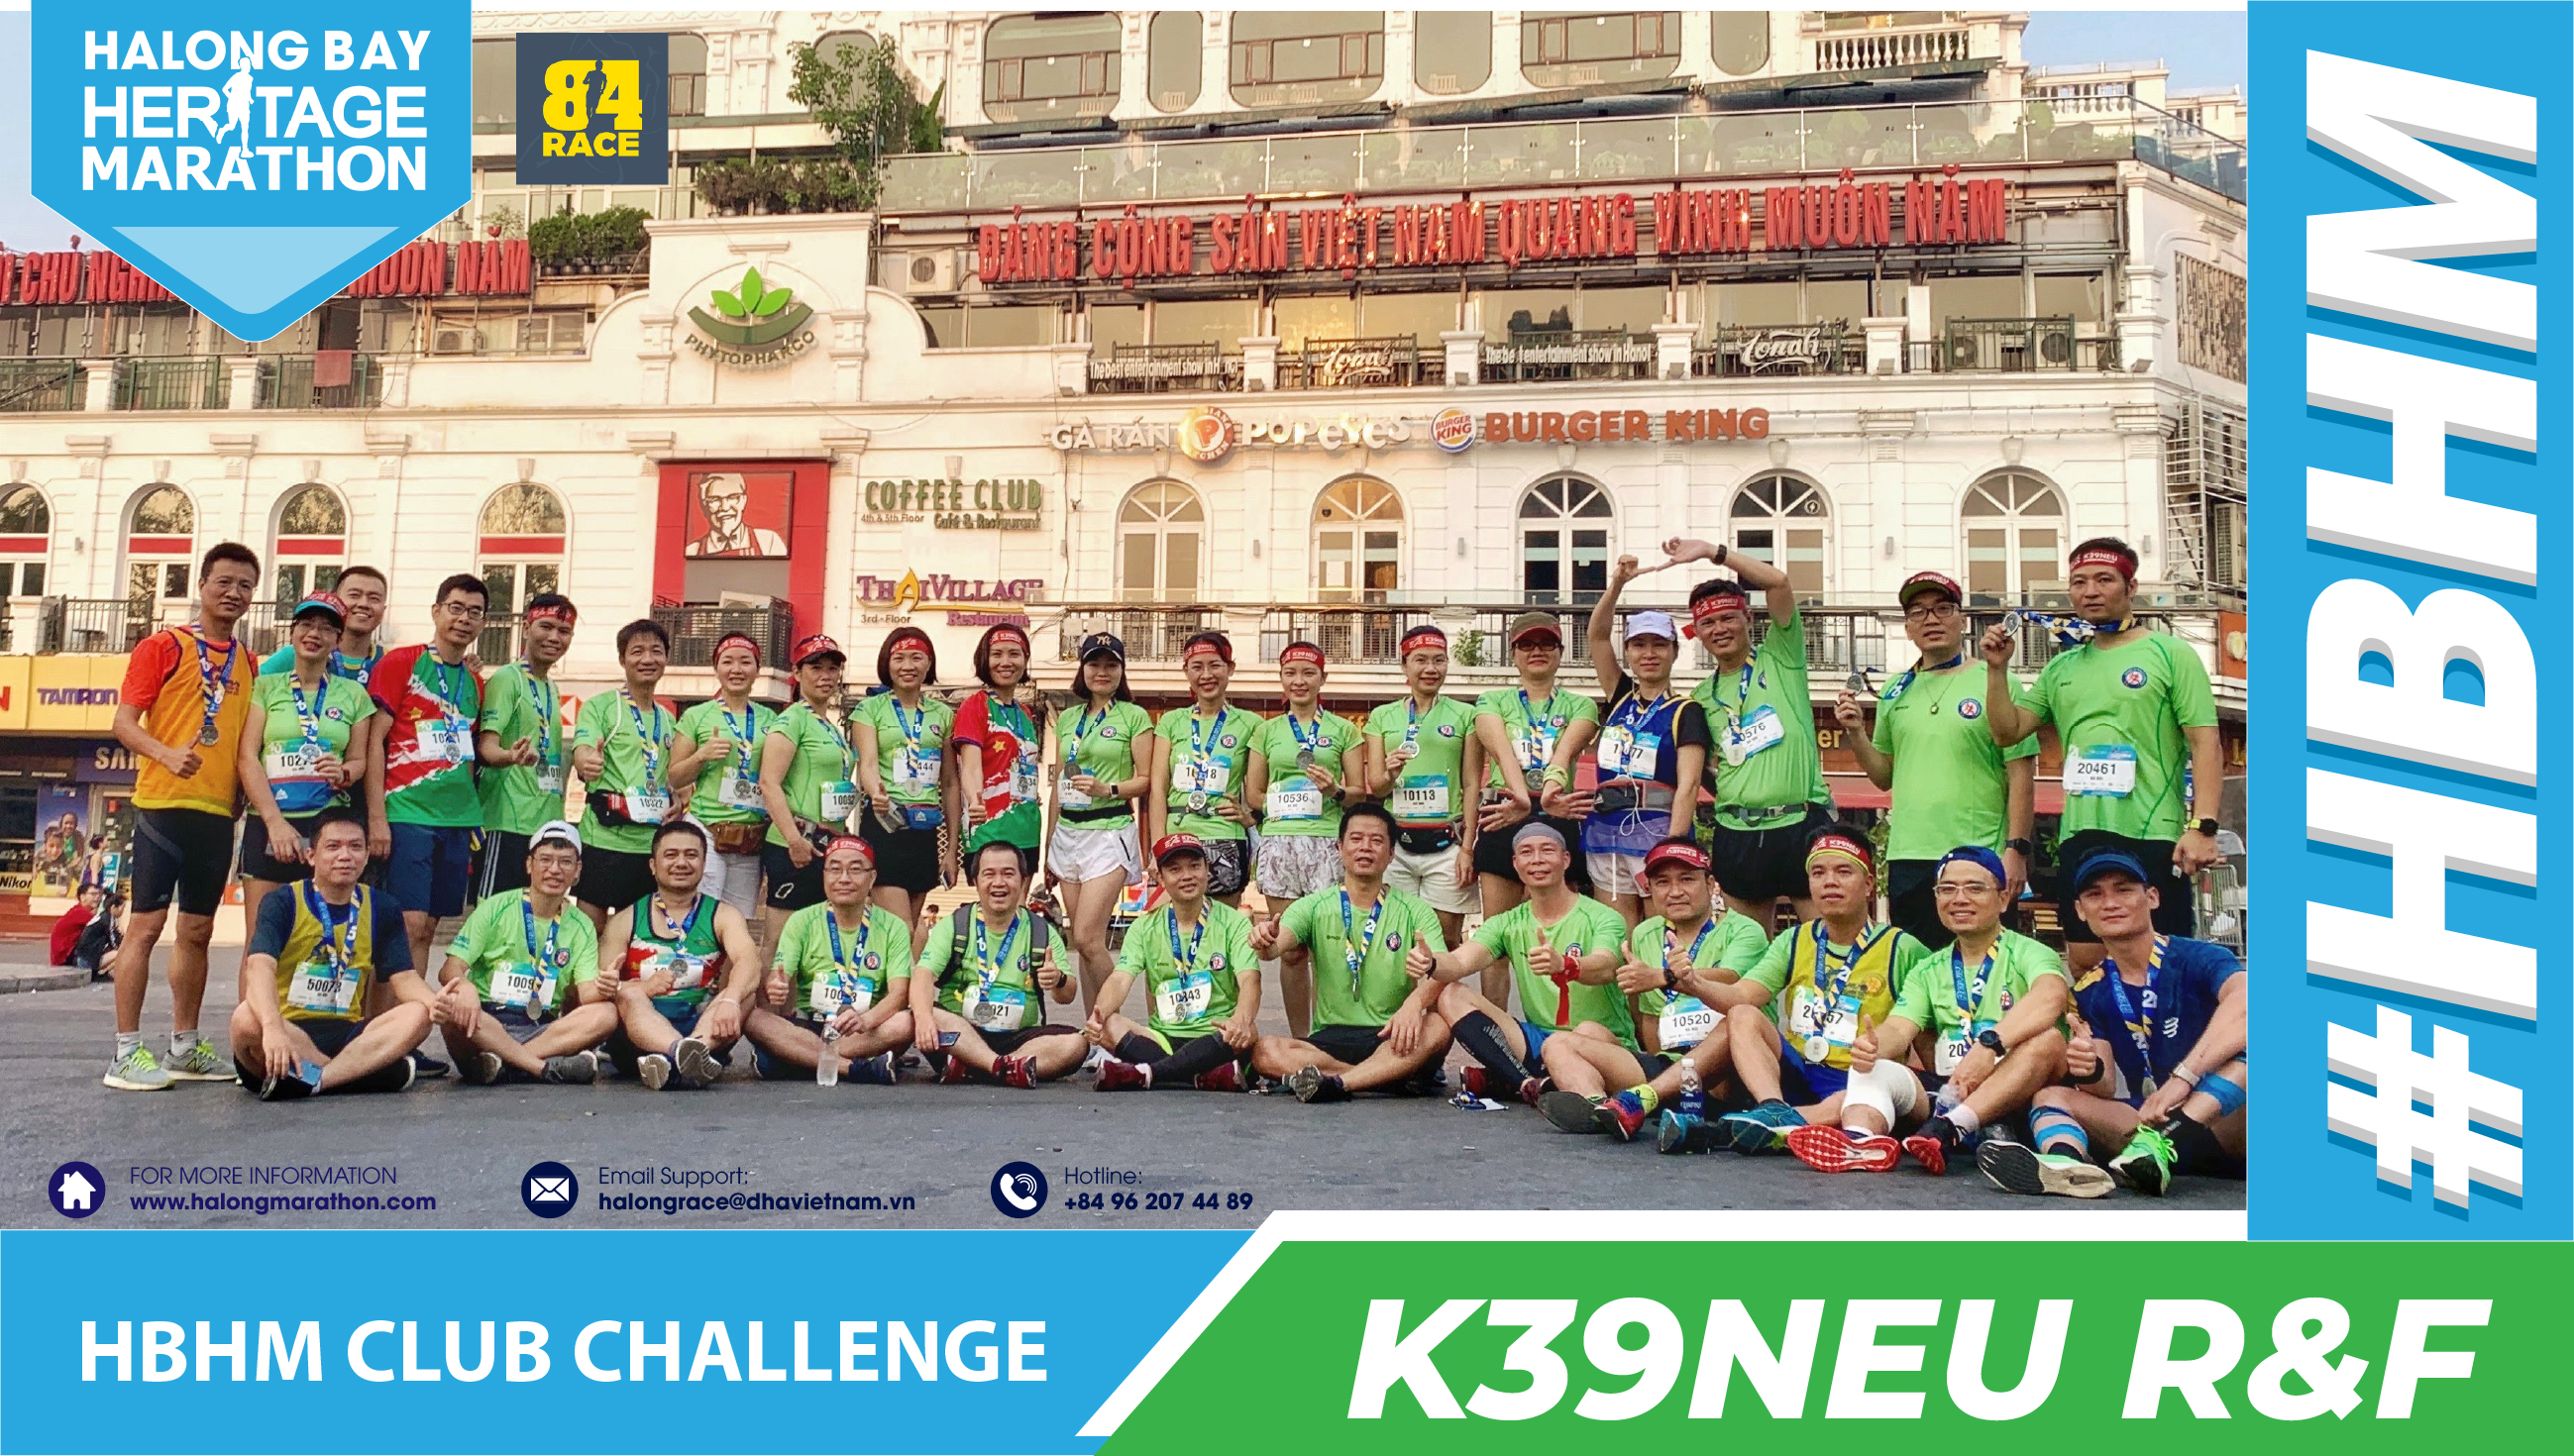 HBHM CLUB CHALLENGE – K39NEU RUNNERS AND FRIENDS